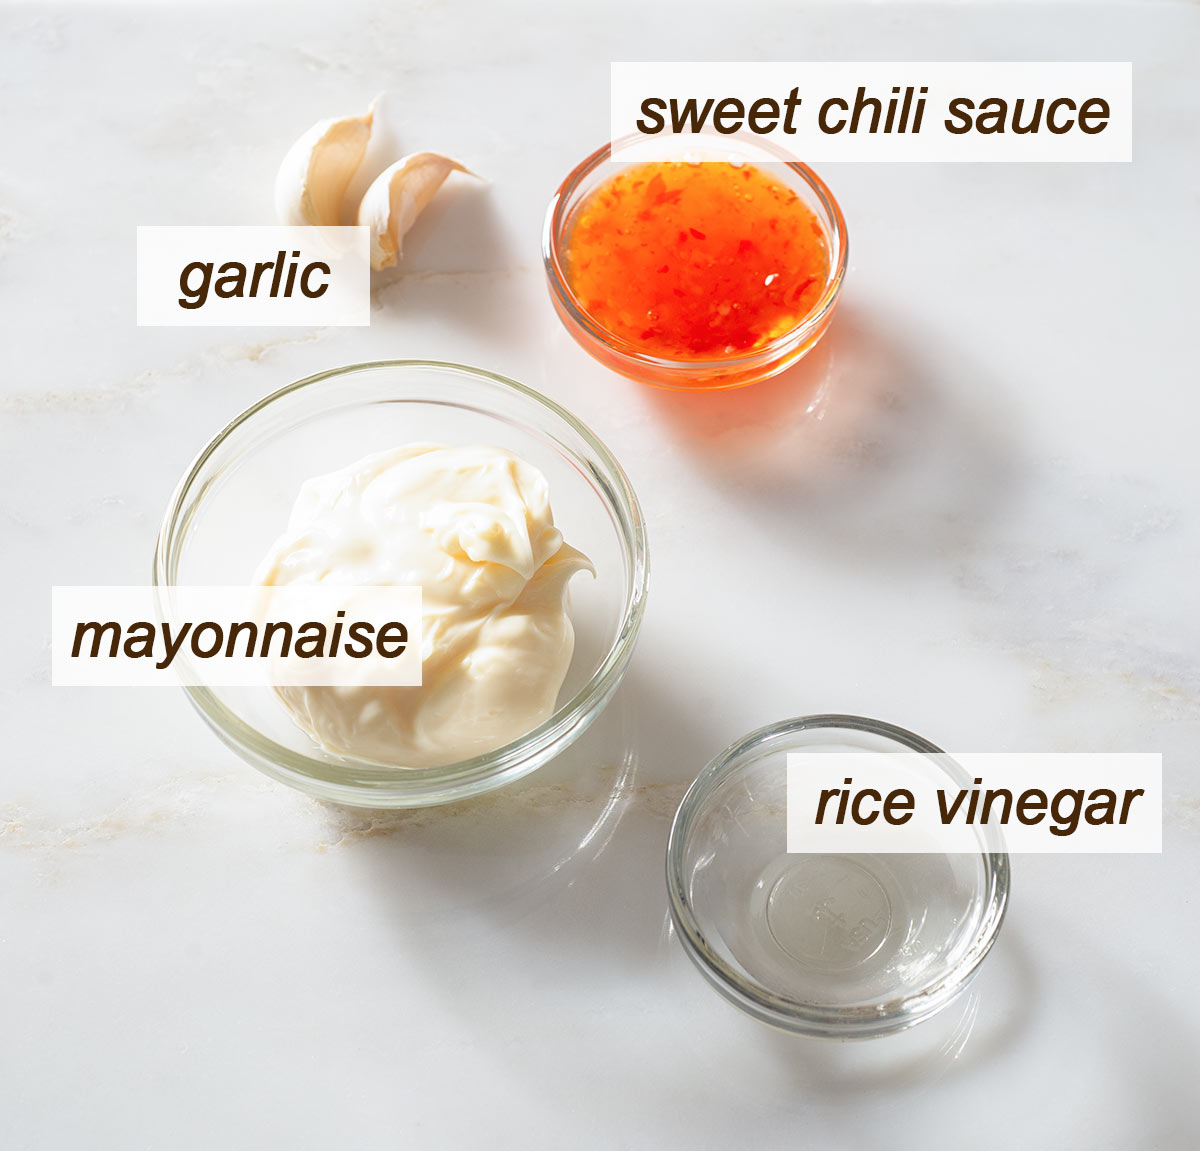 Garlic, mayonnaise, rice vinegar and sweet chili sauce in bowls.